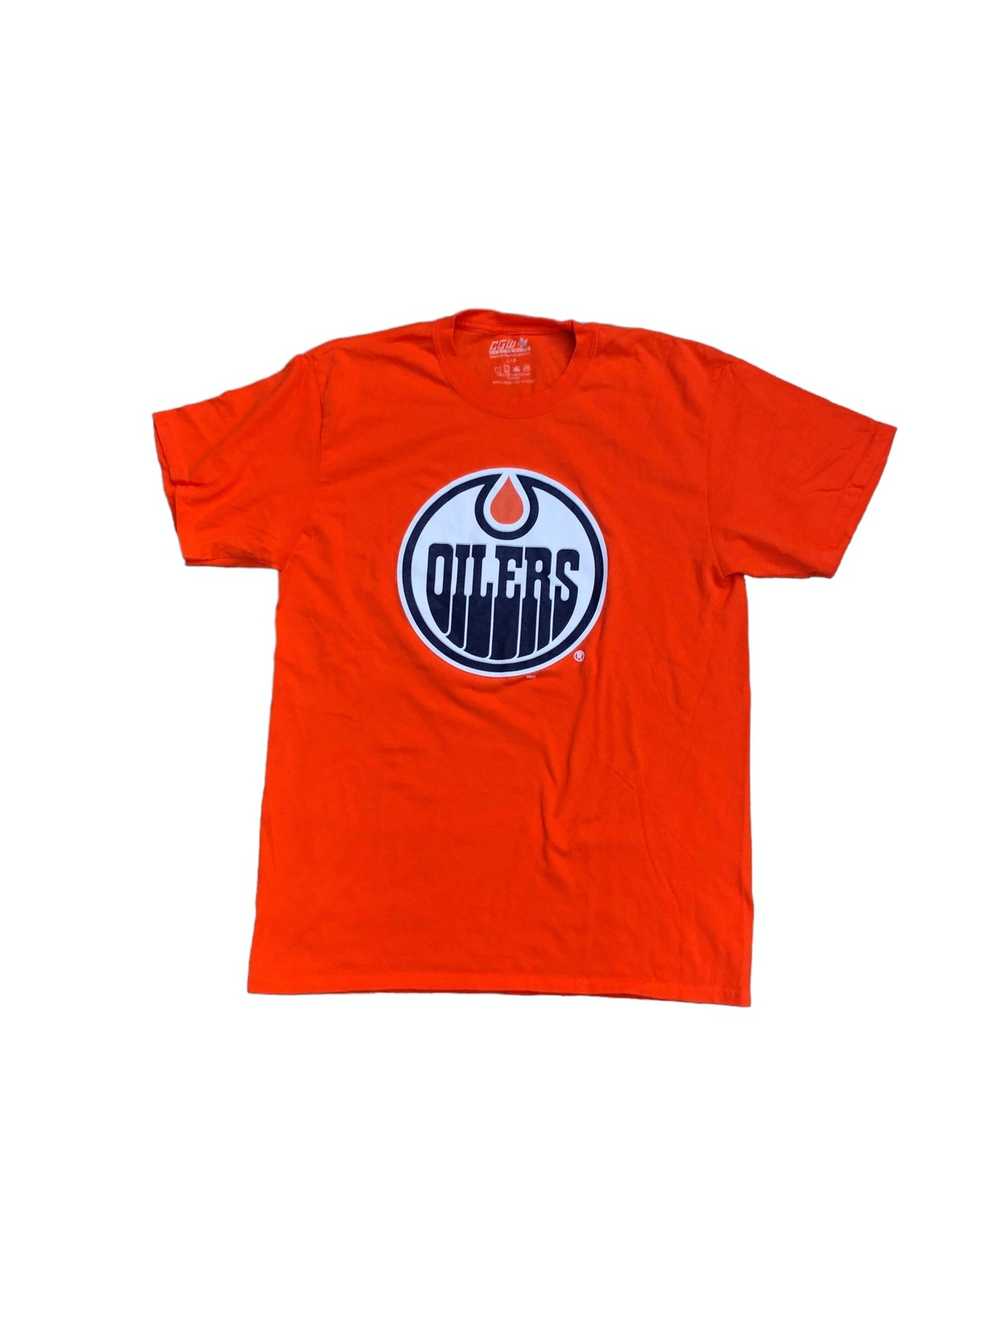 NHL Vintage CGW Edmonton Oilers Shirt Orange Large - image 4